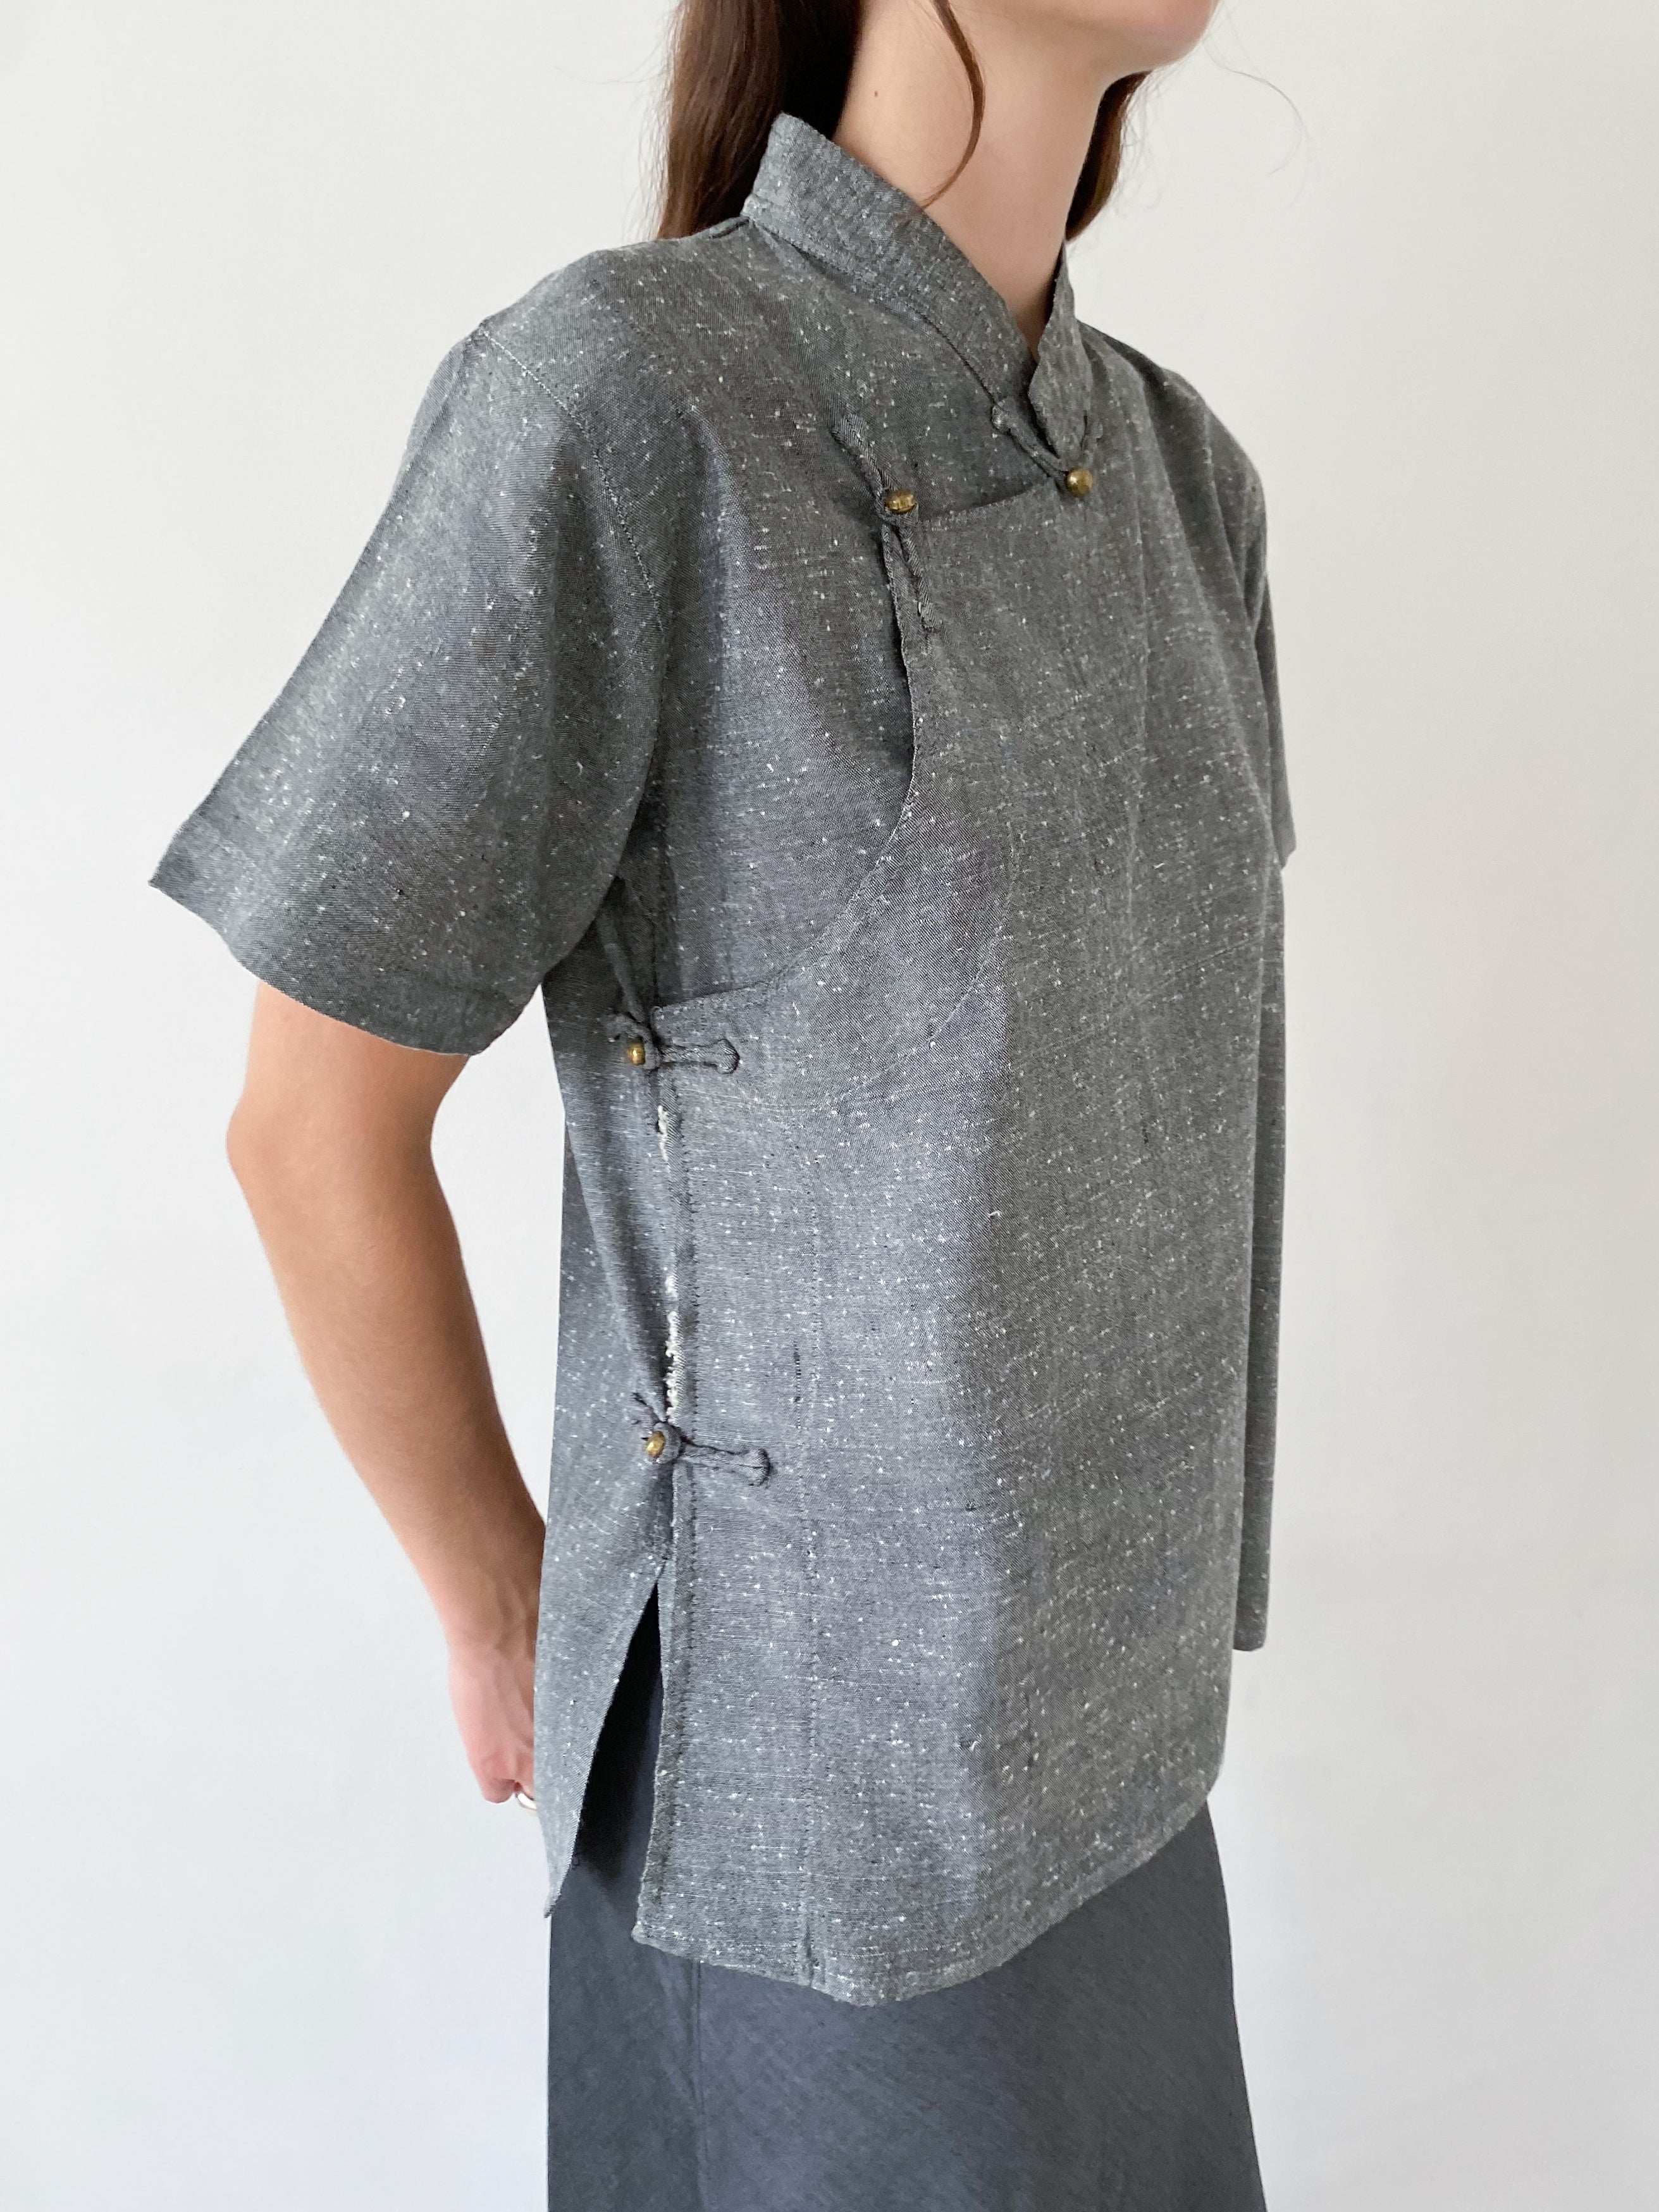 Chinese inspired cotton shirt